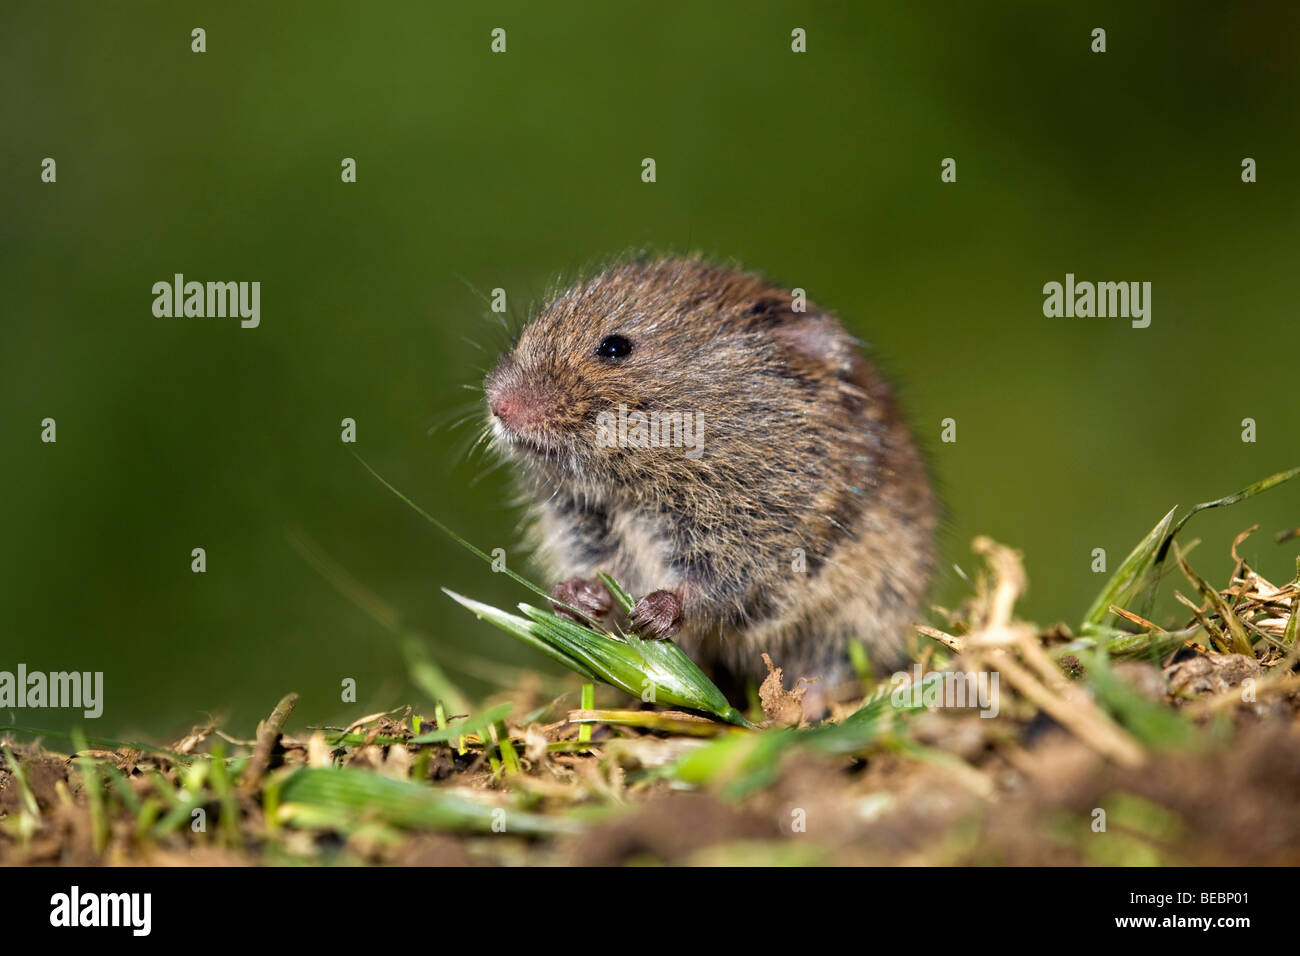 field vole; Microtus agrestis; eating grass Stock Photo